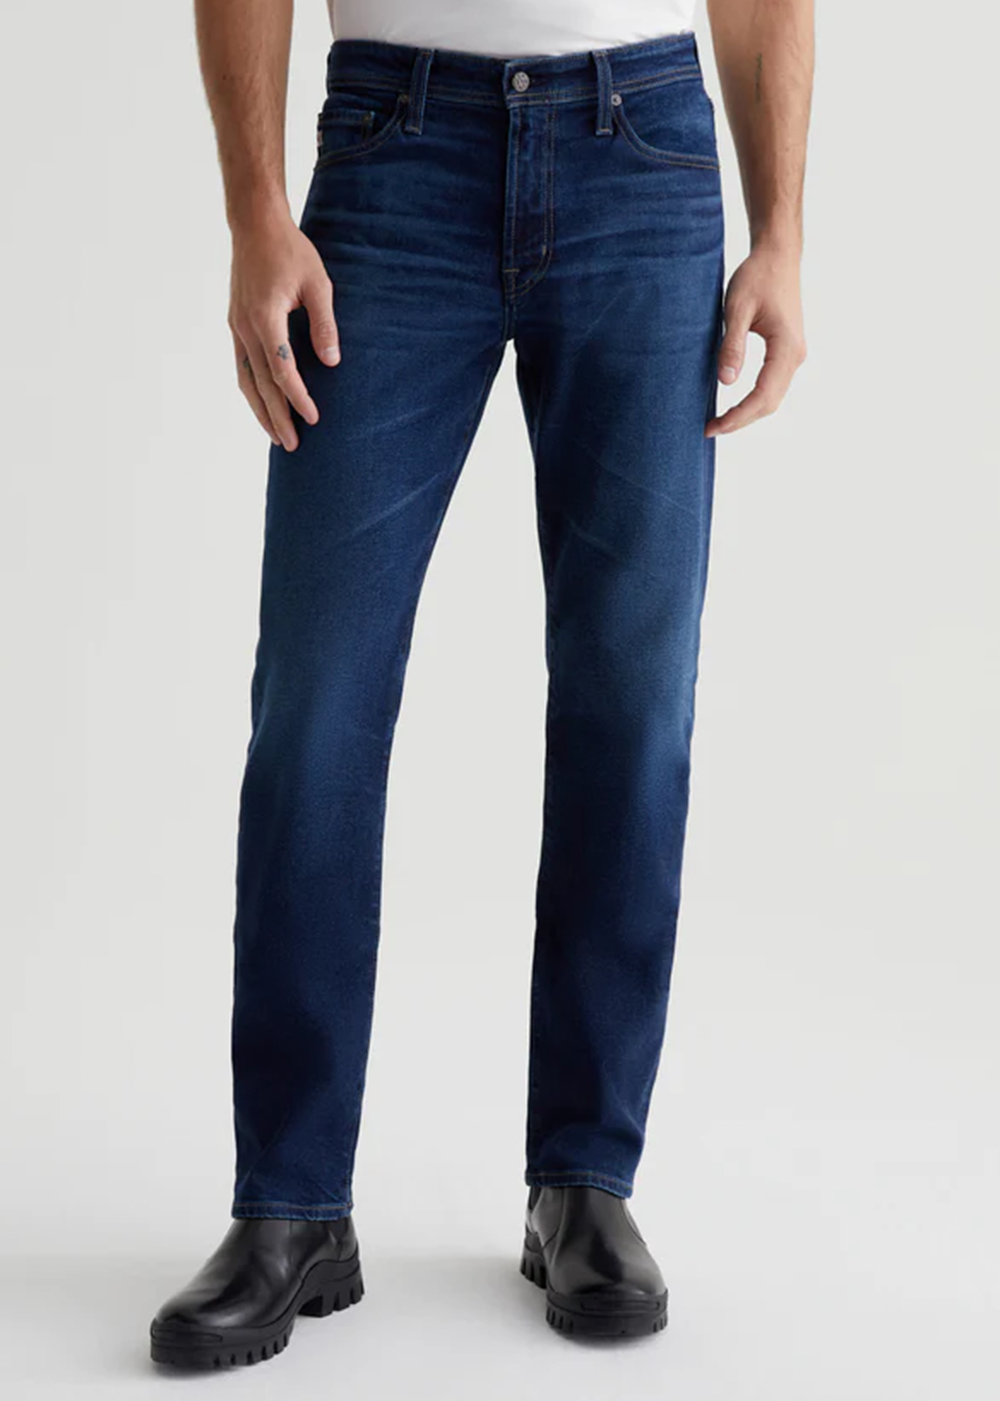 Everett Slim Straight Jean - 4 Years Parker - AG Jeans Canada - Danali - 1794CCS04YPRK